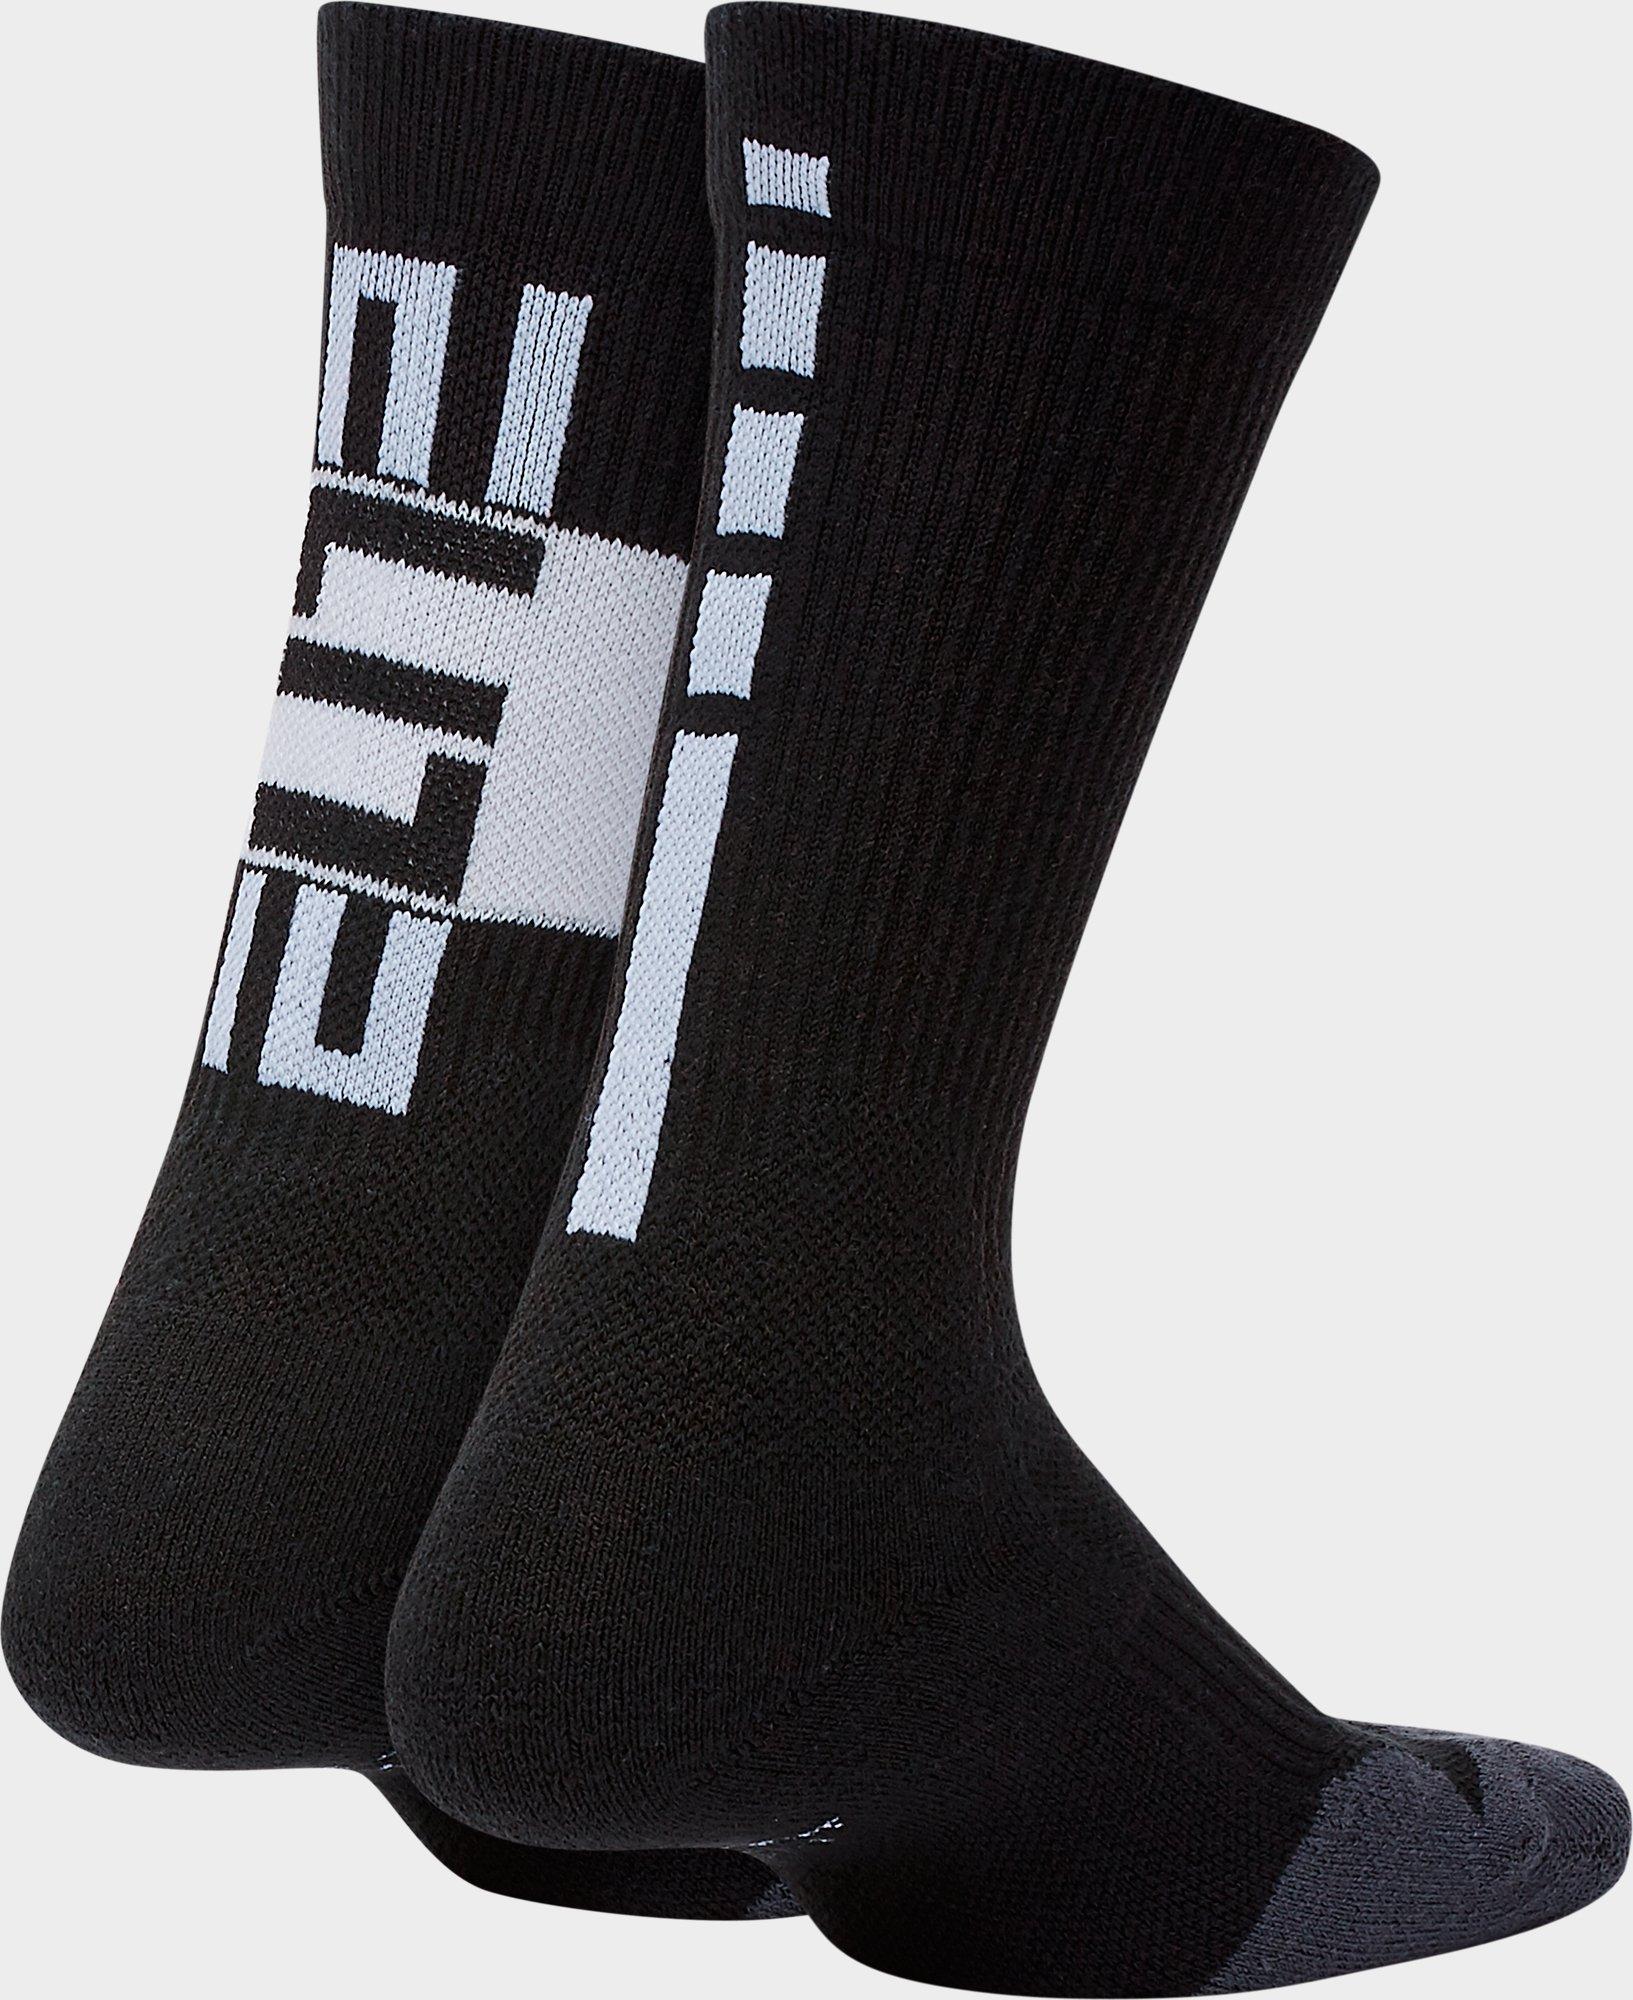 nike elite socks 6 pack